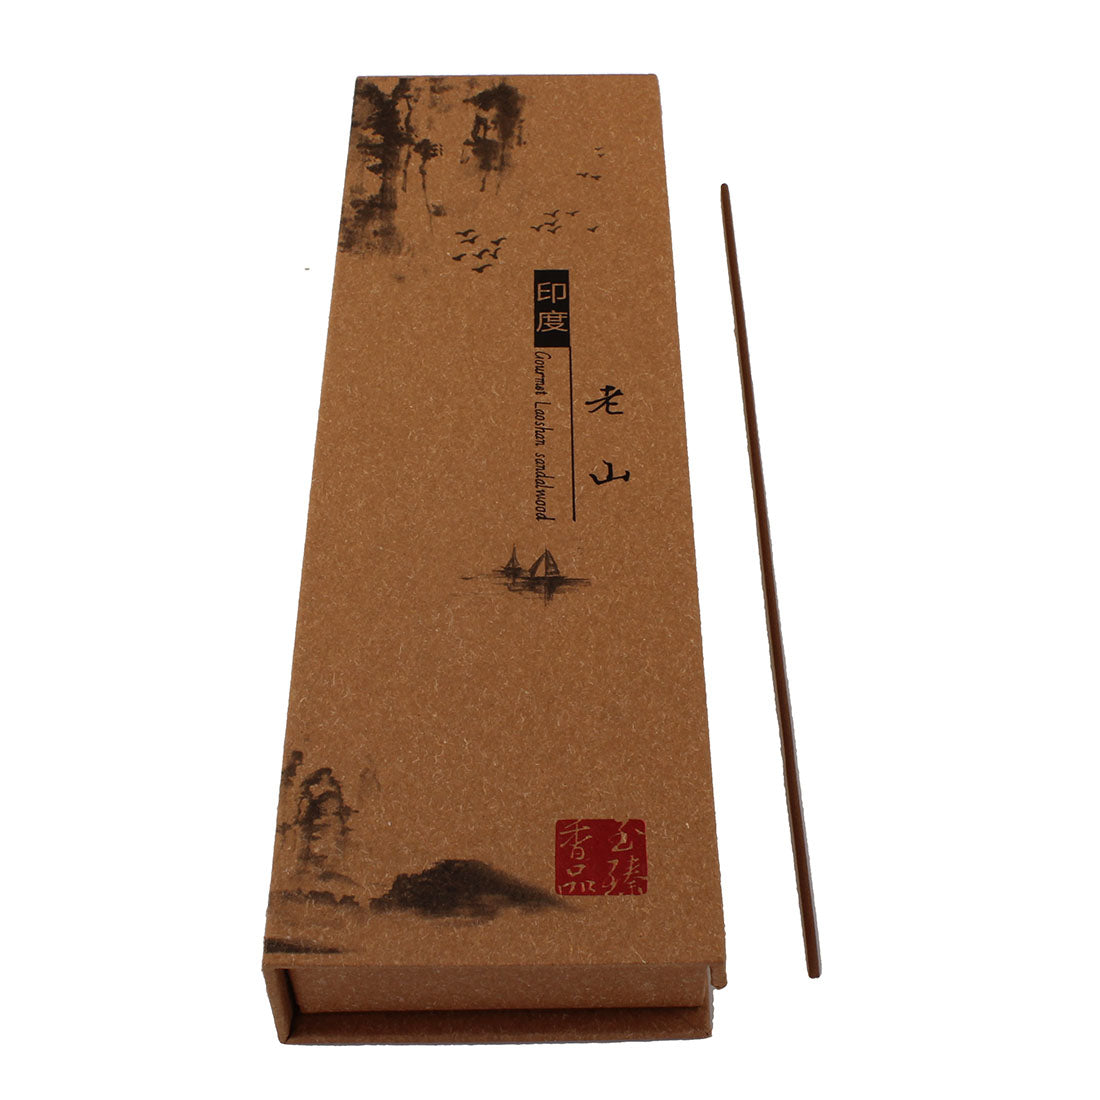 Pack of Incense Sticks - Lao Shan Sandlewood